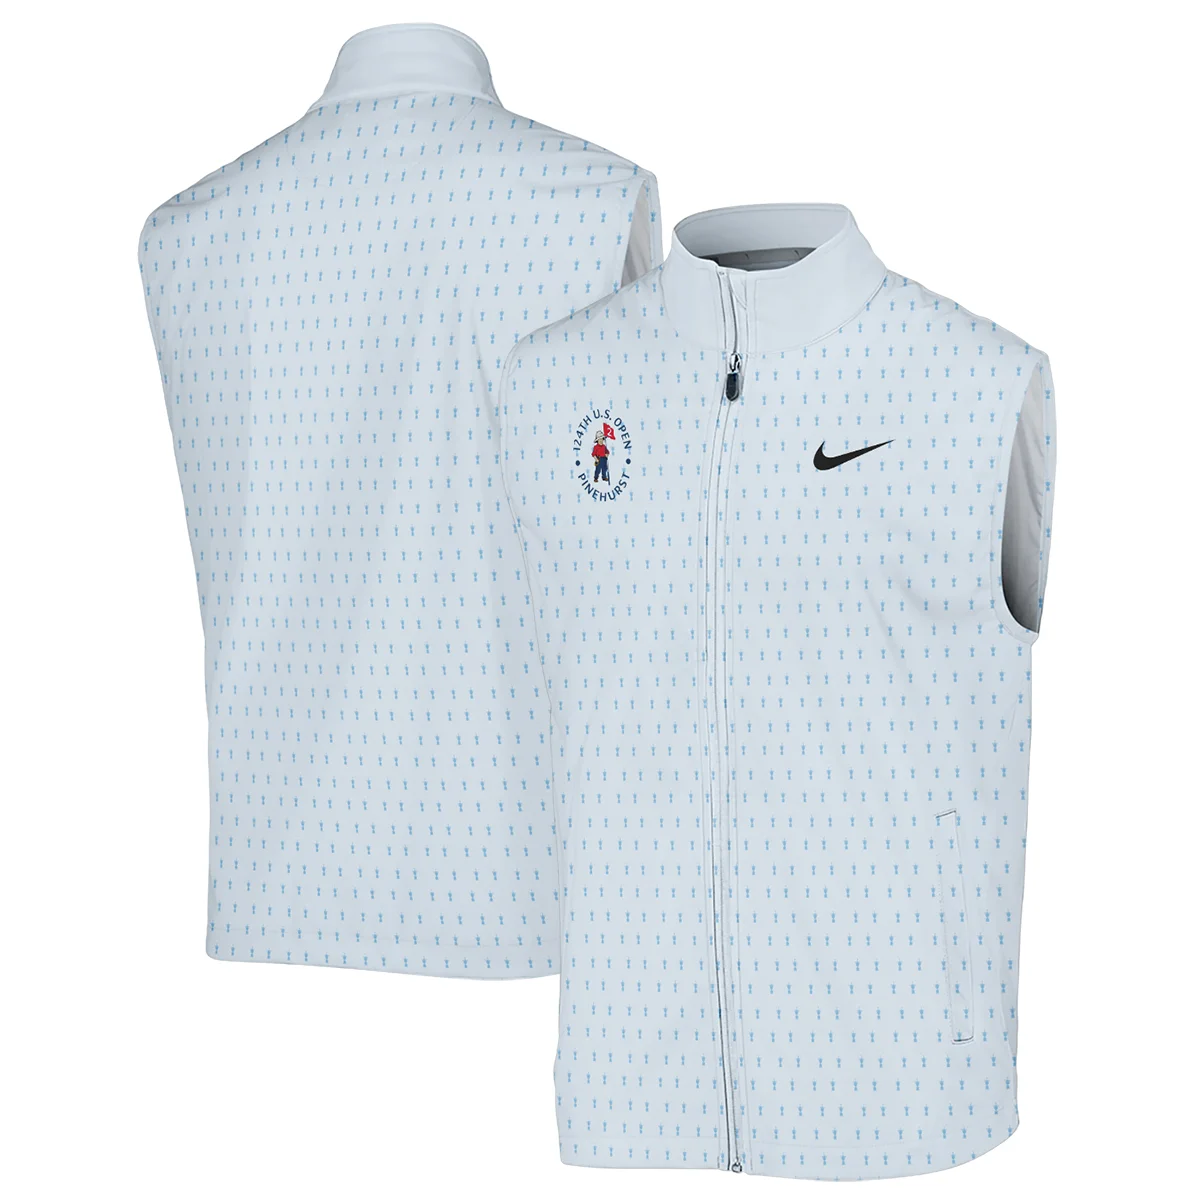 Golf Pattern Cup Light Blue Green 124th U.S. Open Pinehurst Nike Sleeveless Jacket Style Classic Sleeveless Jacket